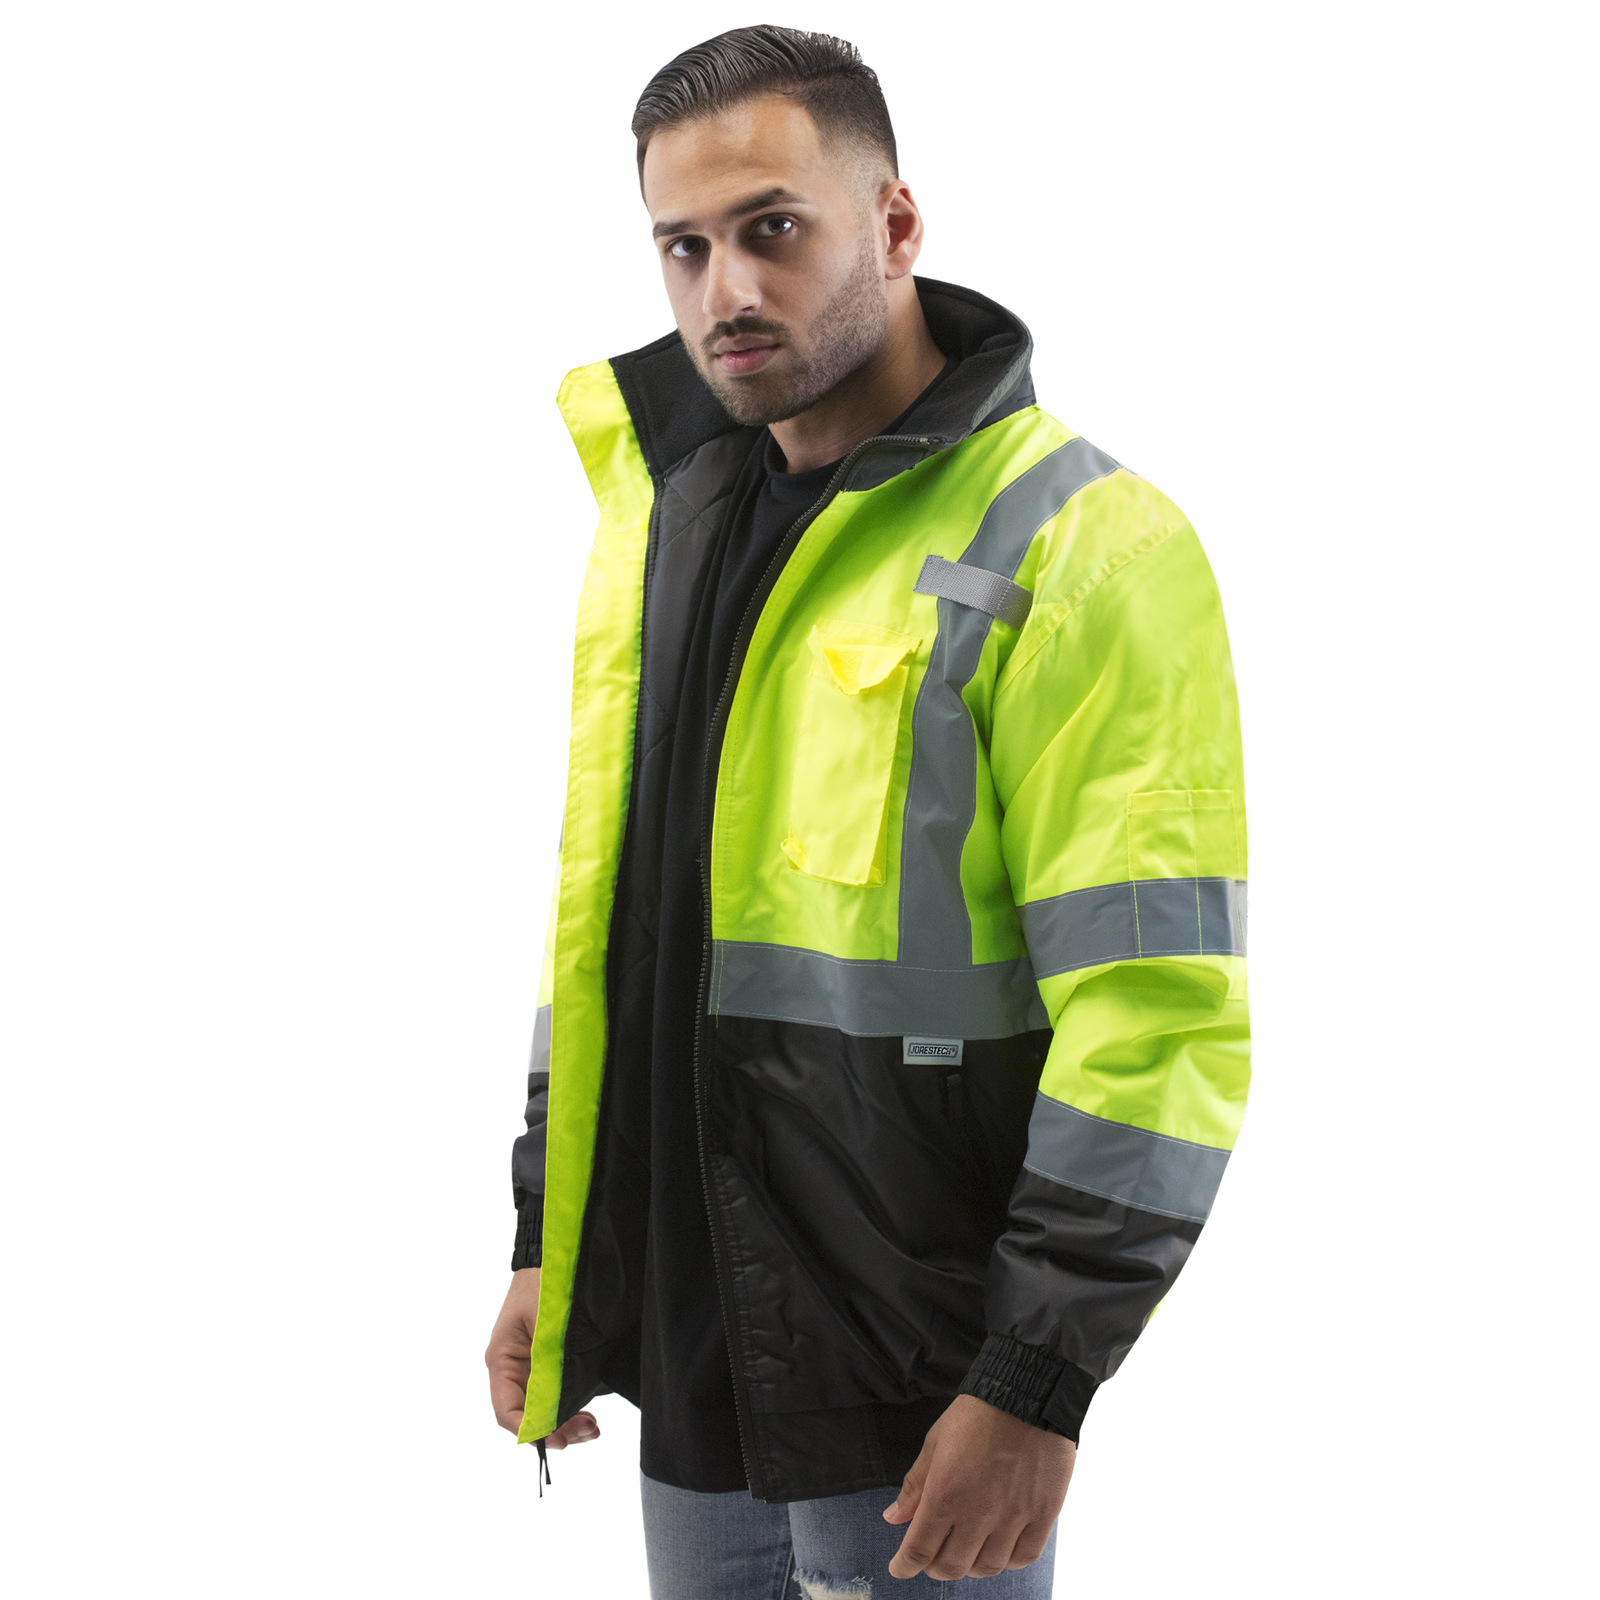 Man wearing the hi vis yellow and black JORESTECH reflective jacket class 3 type R